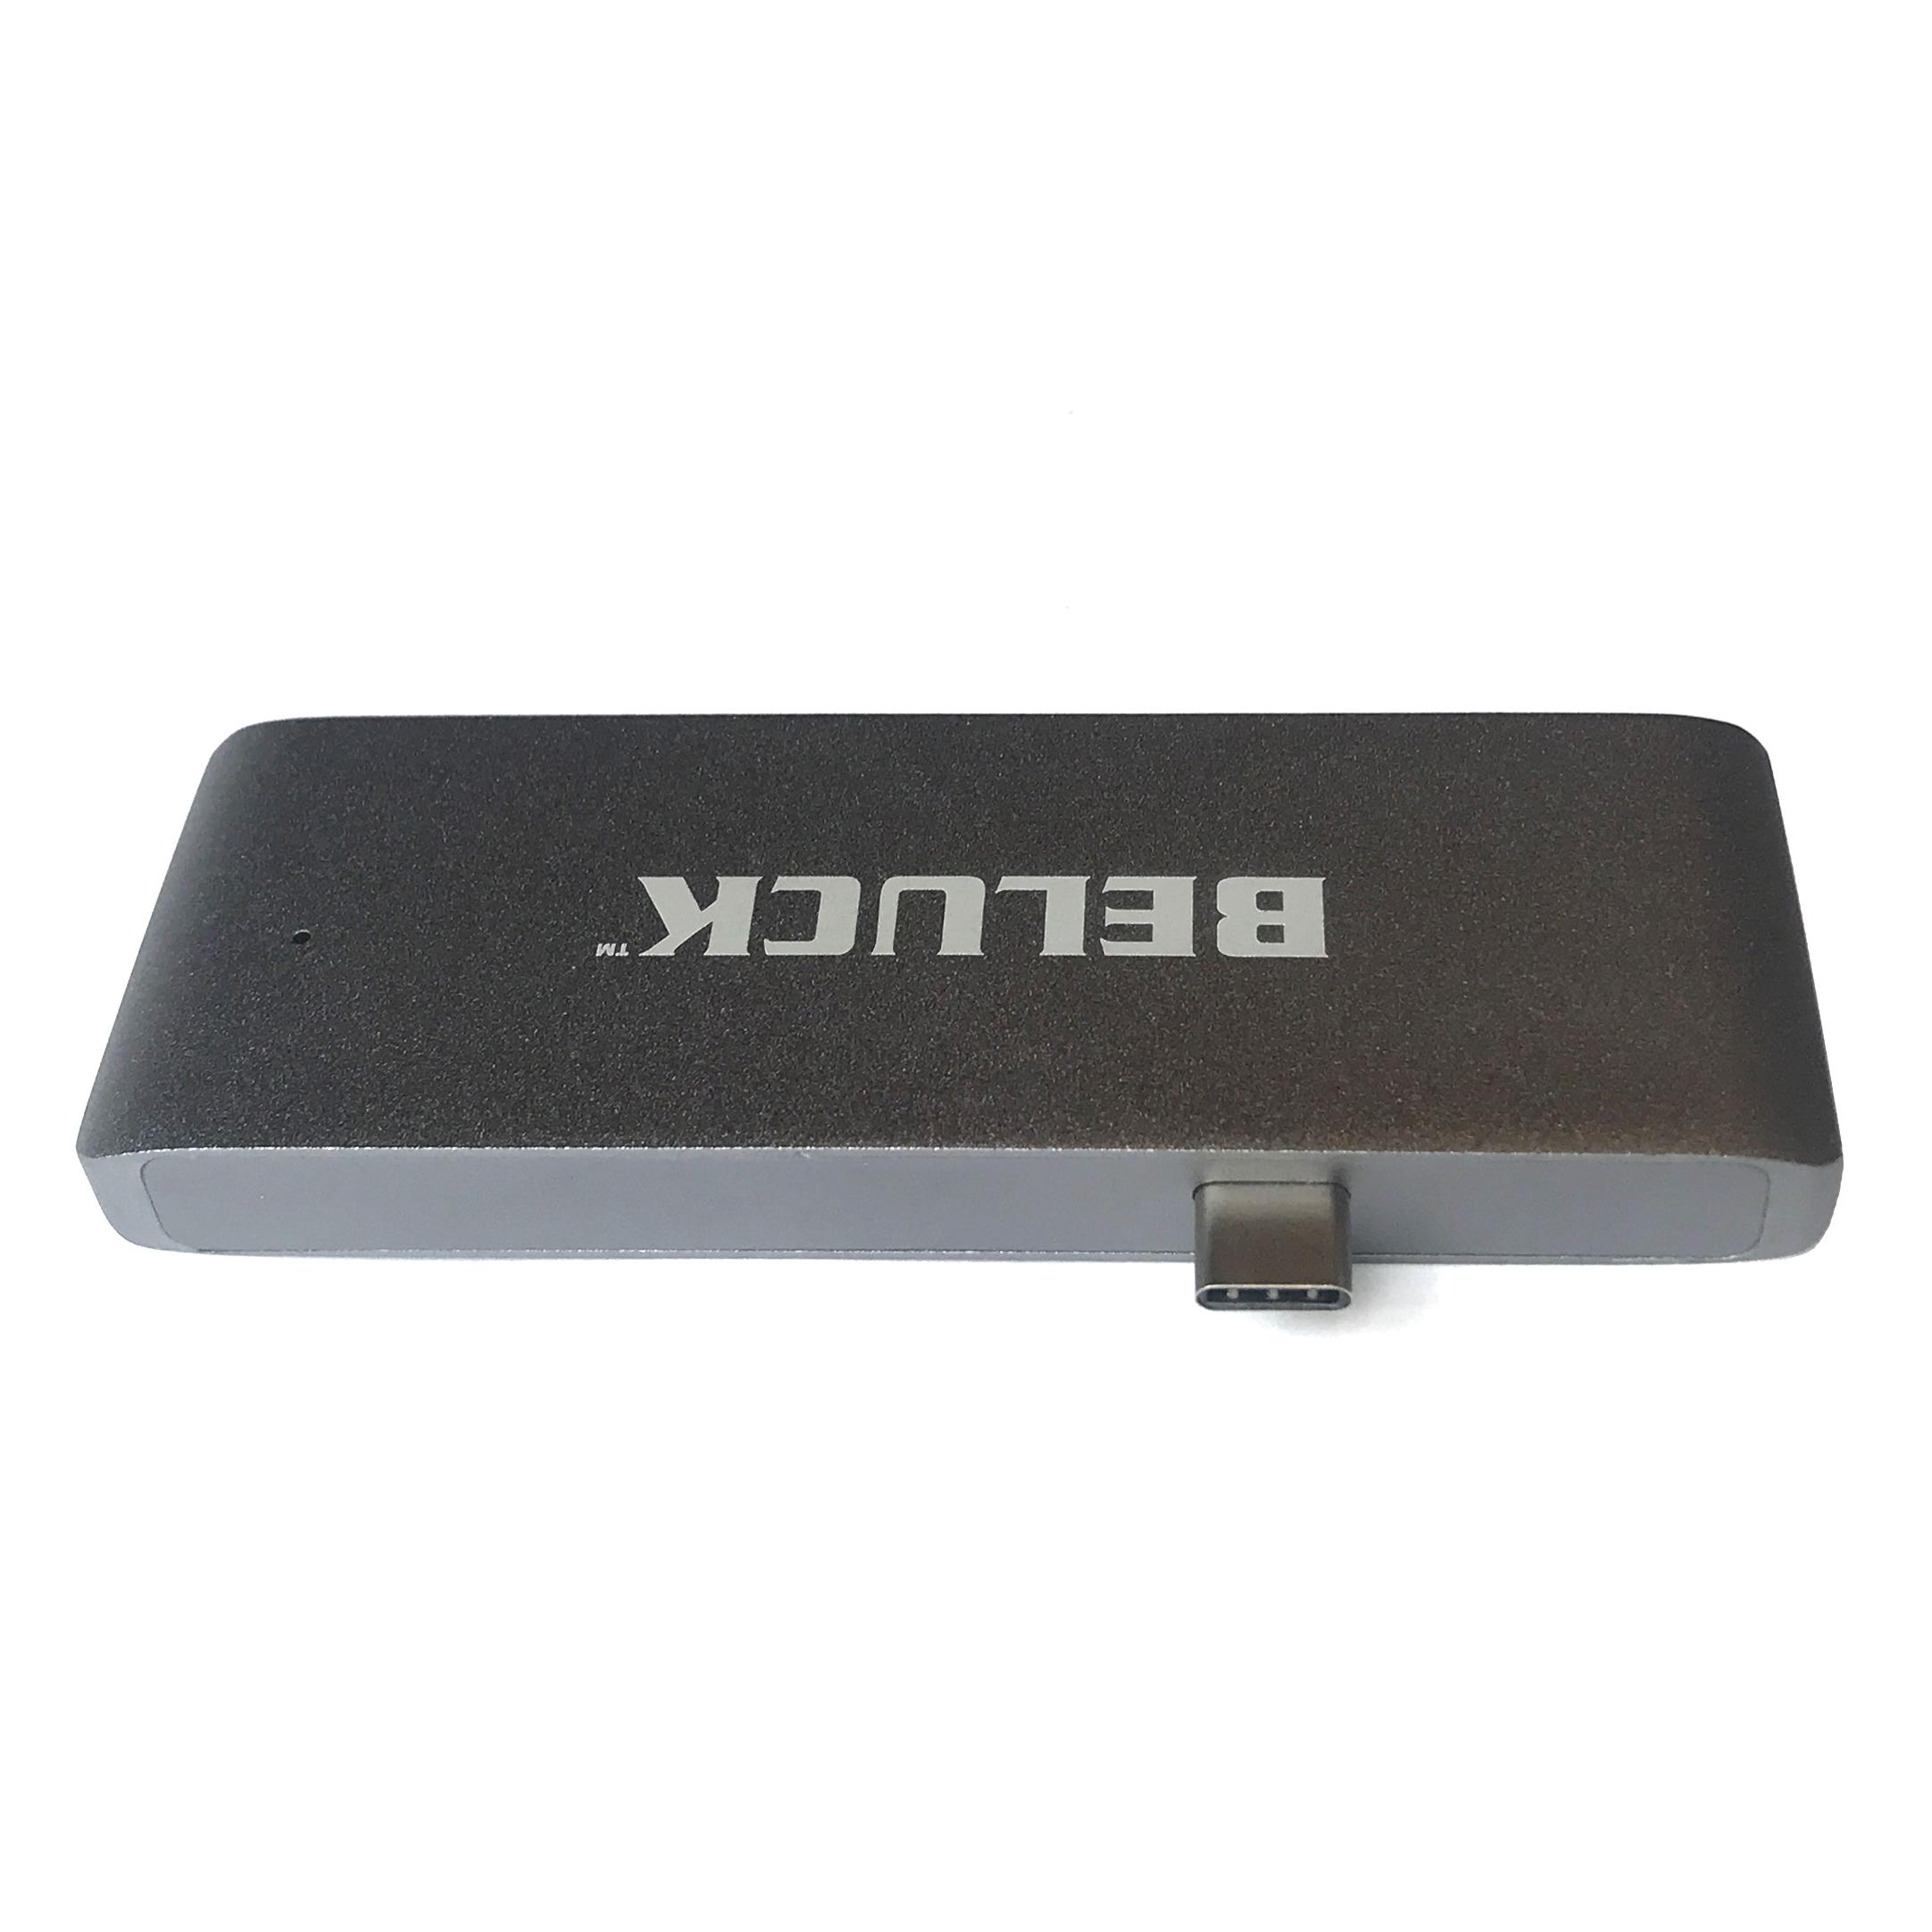 USB hub кардридер 5 в 1 UFT Beluck Type-C / USB 3.0 / SD / MicroSD Beluck Hub